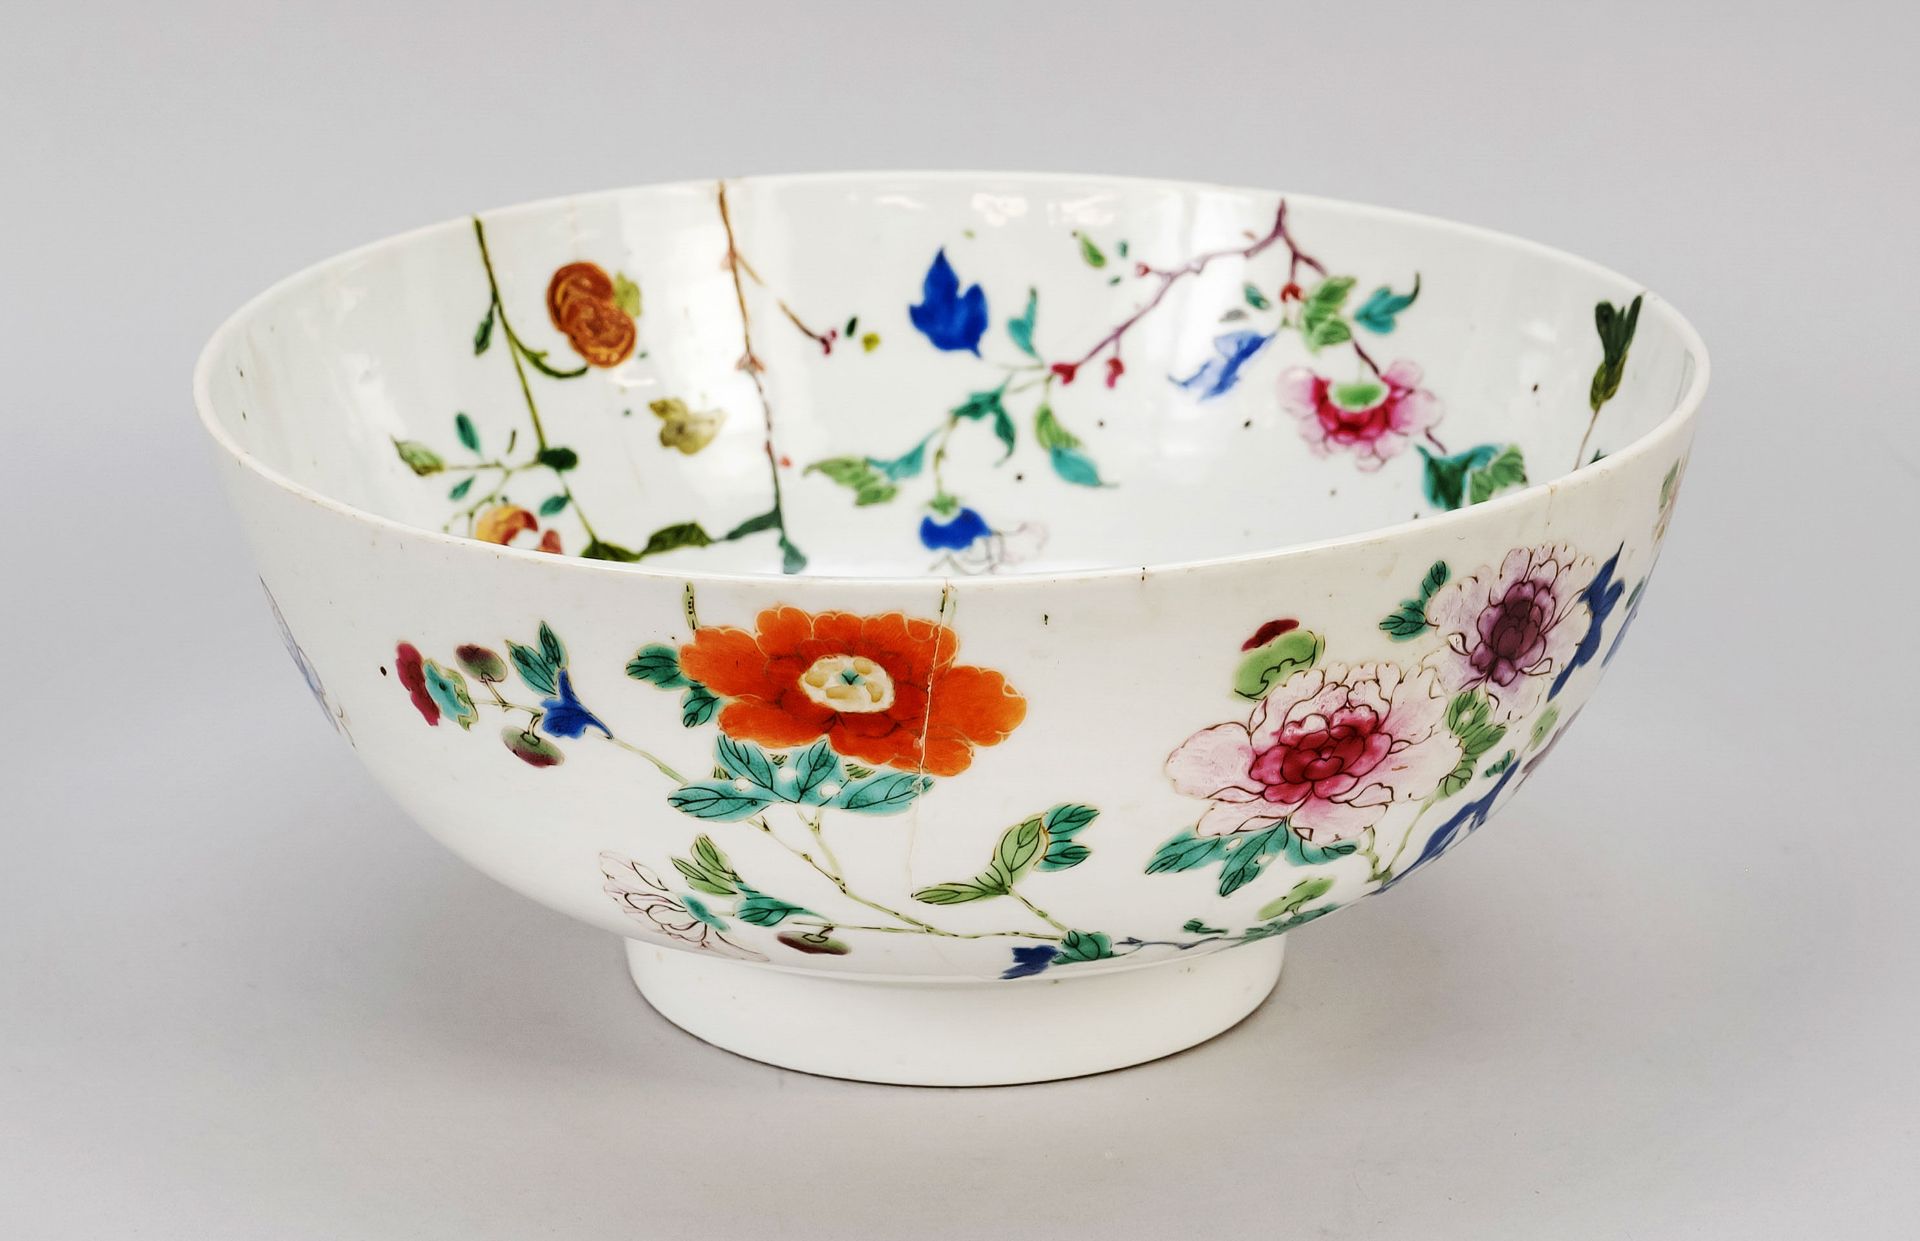 Sog. Punch bowl, China, Qing, Yongzheng period(1723-1735), 18th century, porcelain with enamel